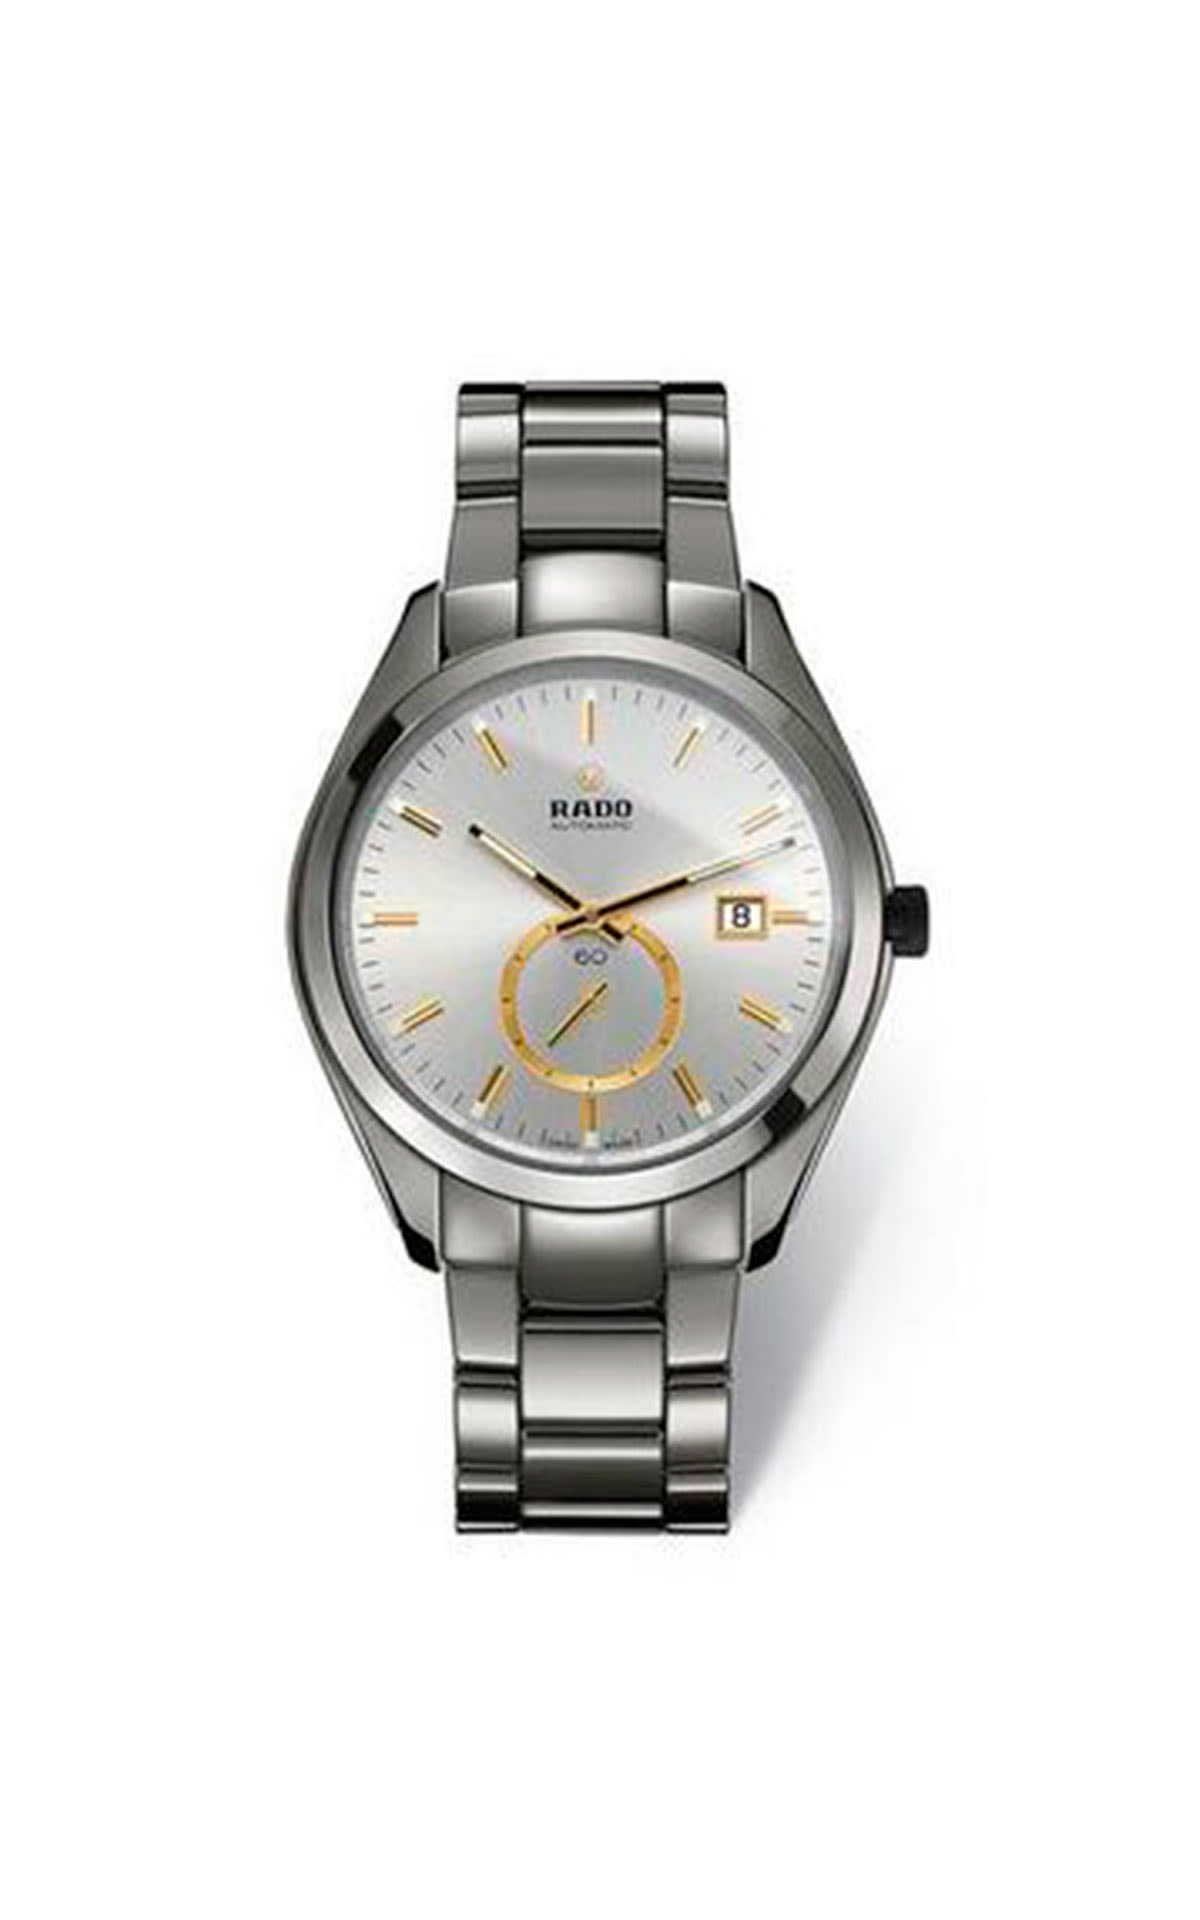 Silver Rado watch with gold details